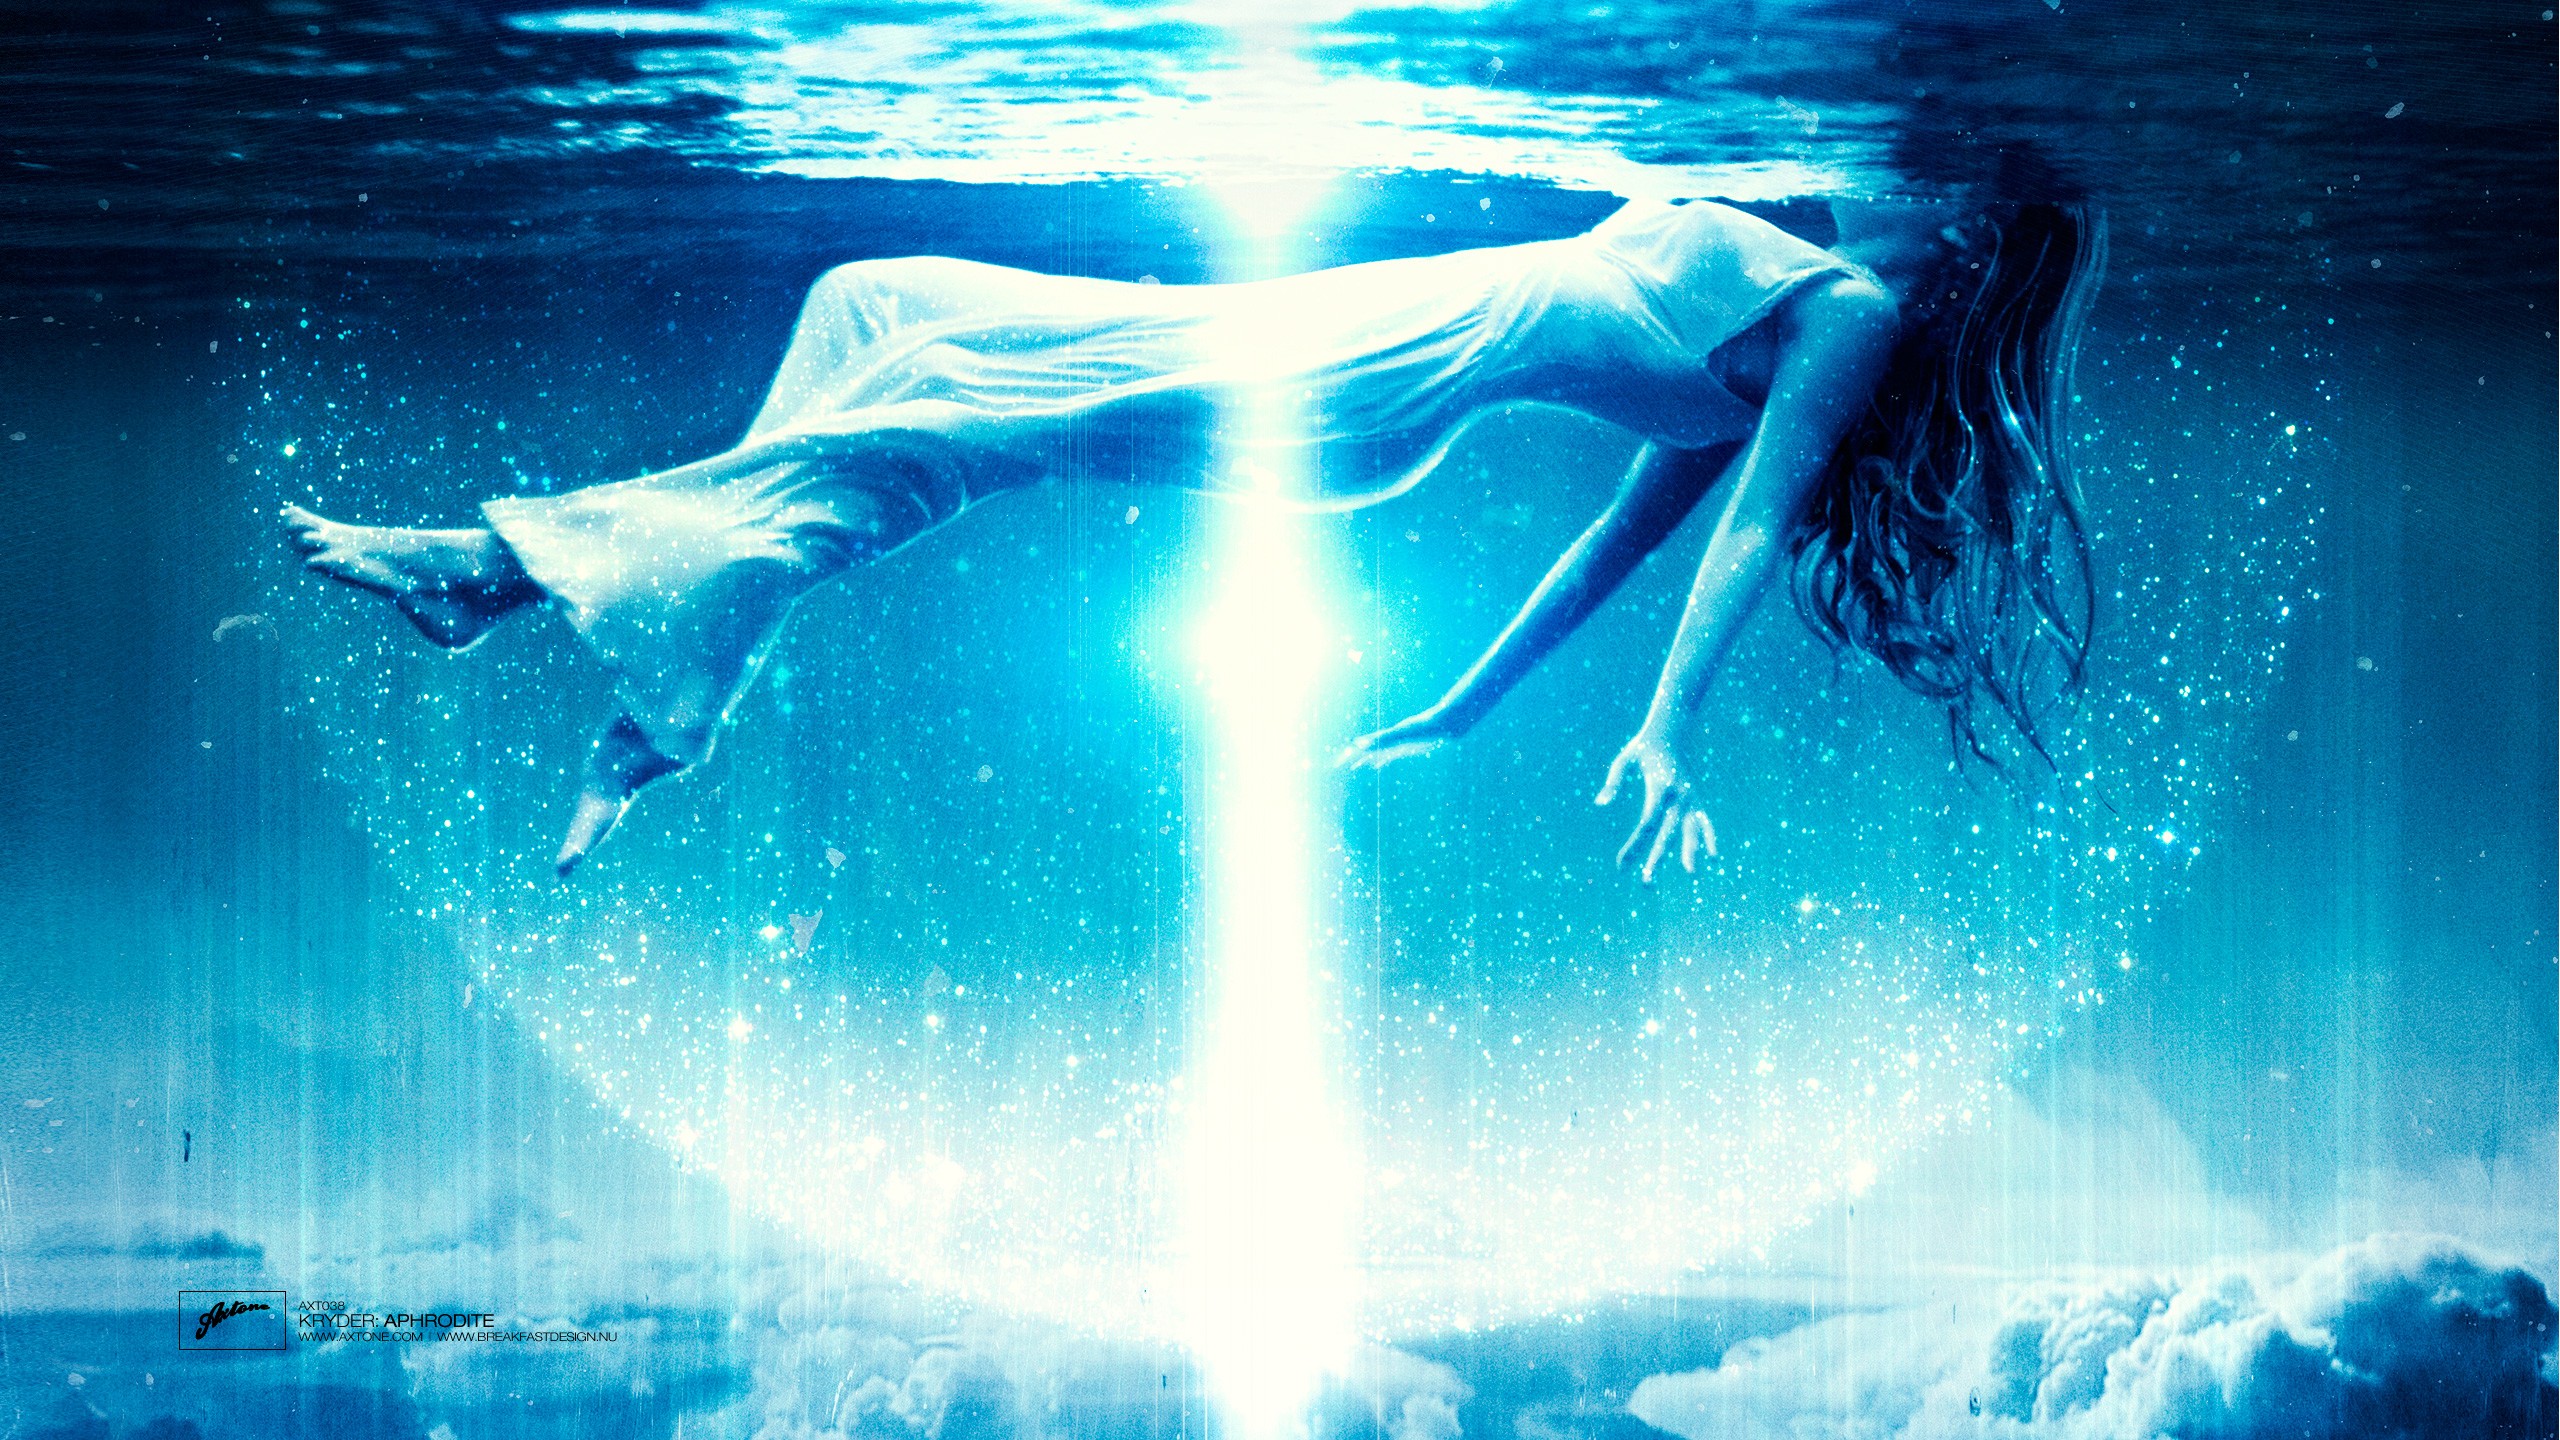 General 2560x1440 Axwell Eternal Sunshine of the Spotless Mind angel lights swings underwater floating cyan women barefoot long hair